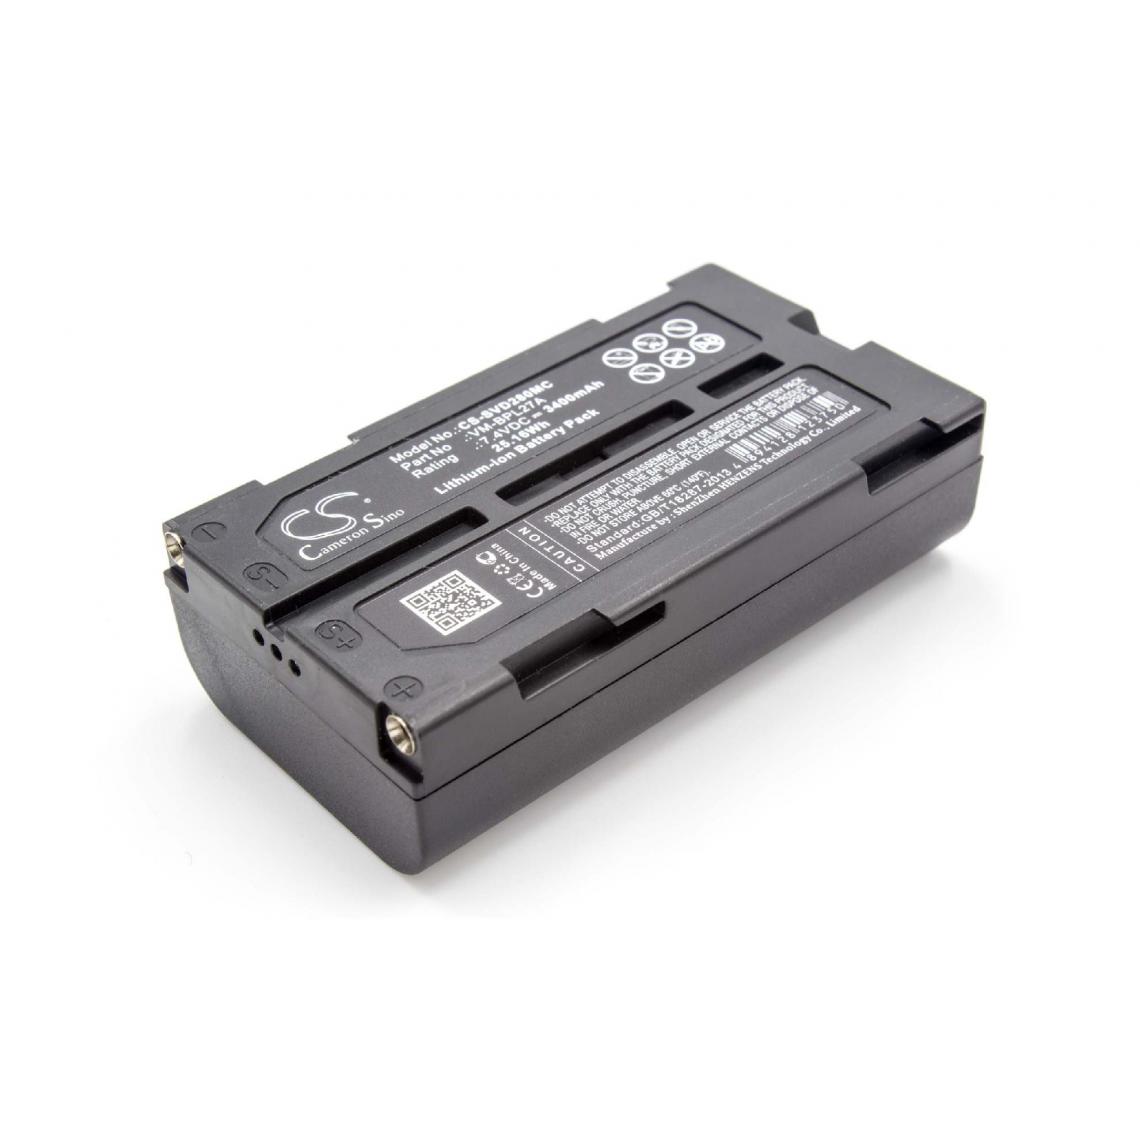 Vhbw - vhbw Batterie compatible avec Sokkia SET 530RK, SET530RK3, SET5 30RK3, SET 530RK3, SET550RX outil de mesure (3400mAh, 7,4V, Li-ion) - Piles rechargeables